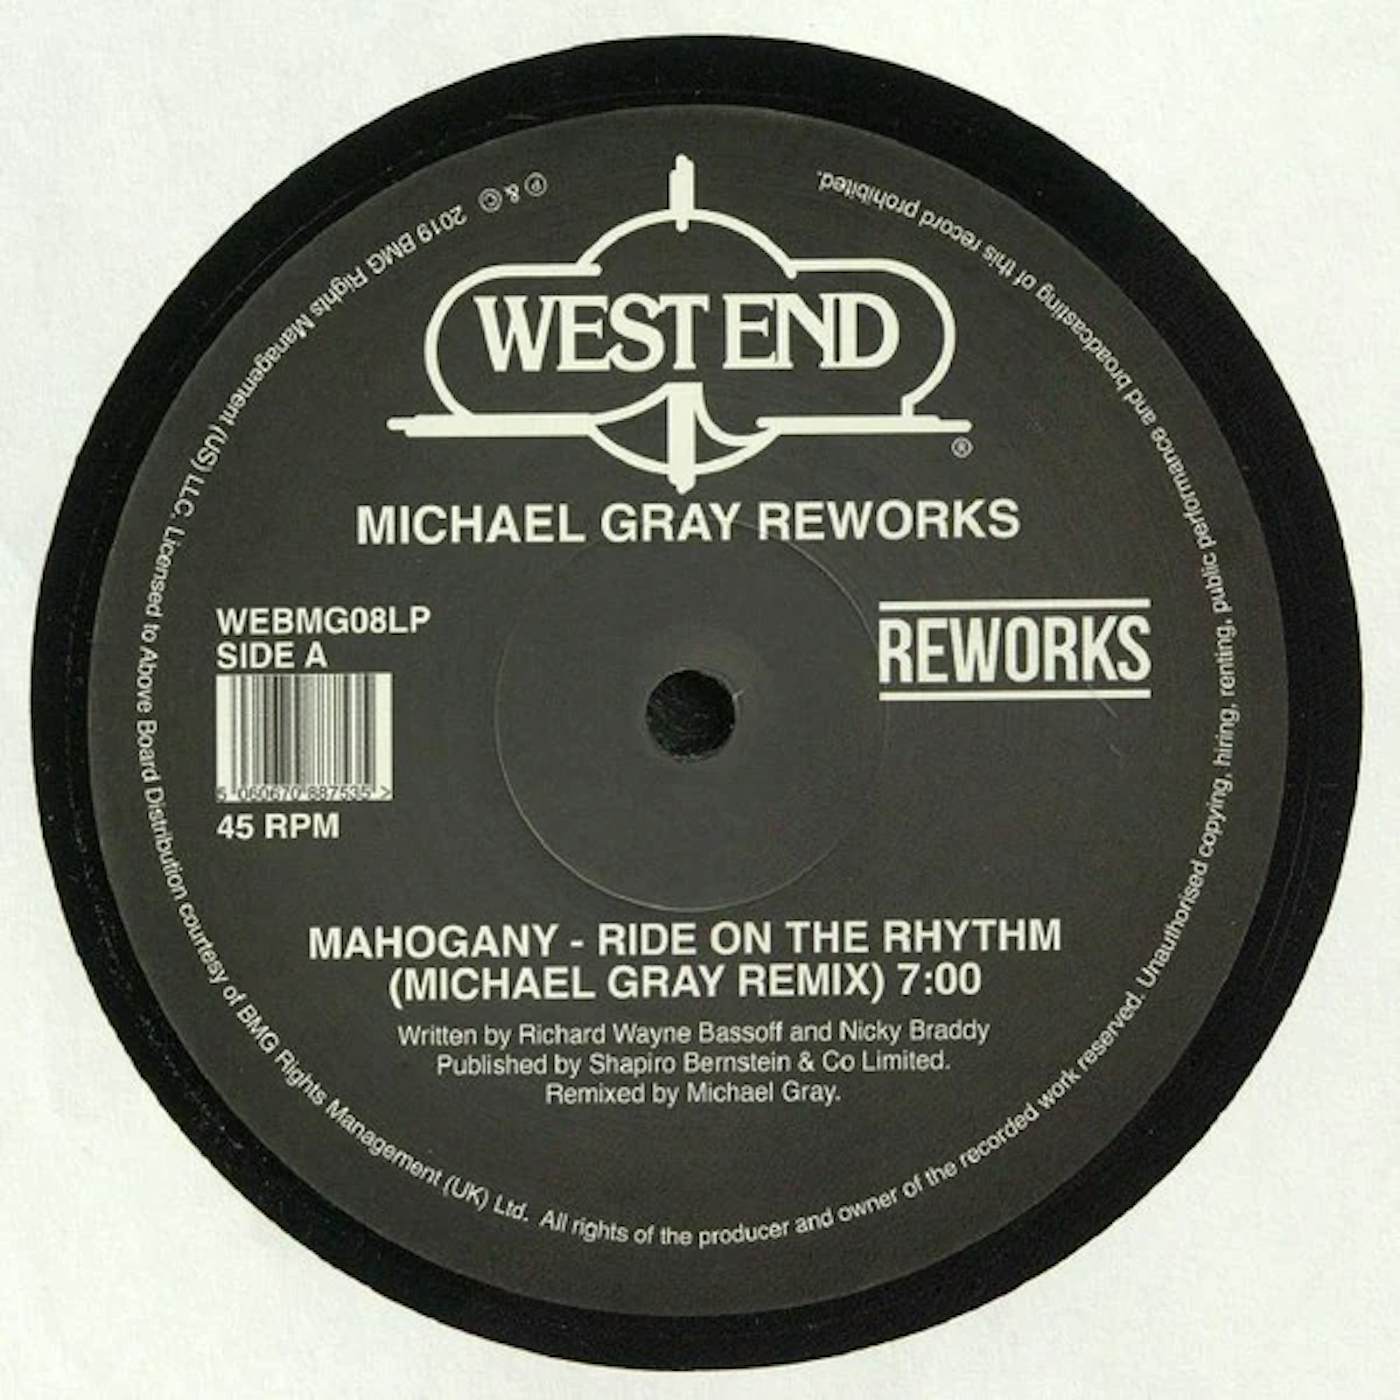 Michael Gray WEST END REWORKS Vinyl Record